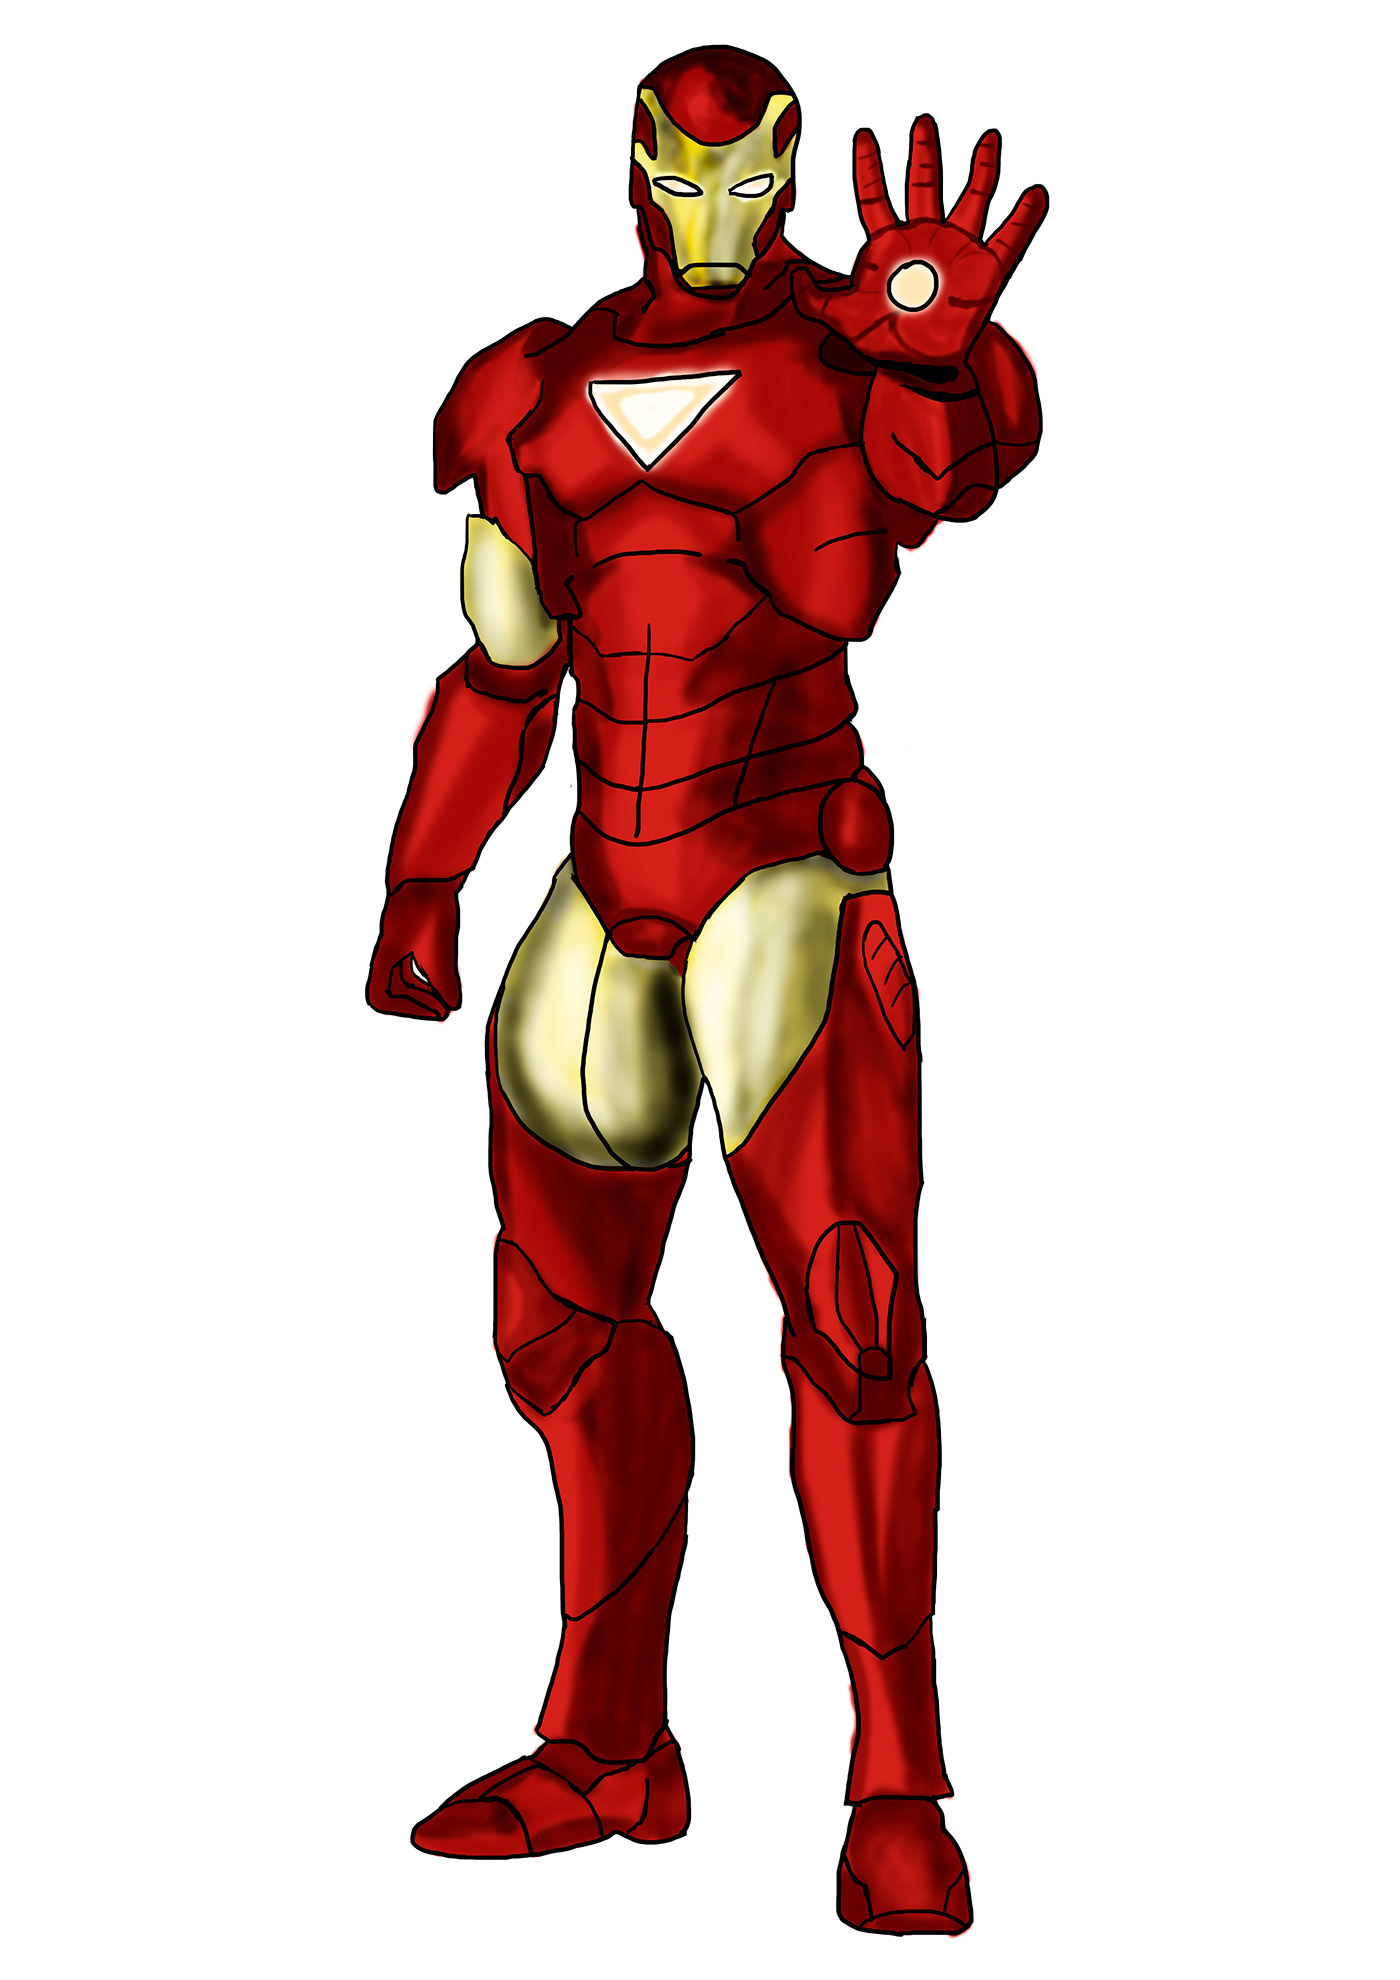 Avengers Digital Art  ILLUSTRATION  iron man marvel photoshop SuperHero tony stark